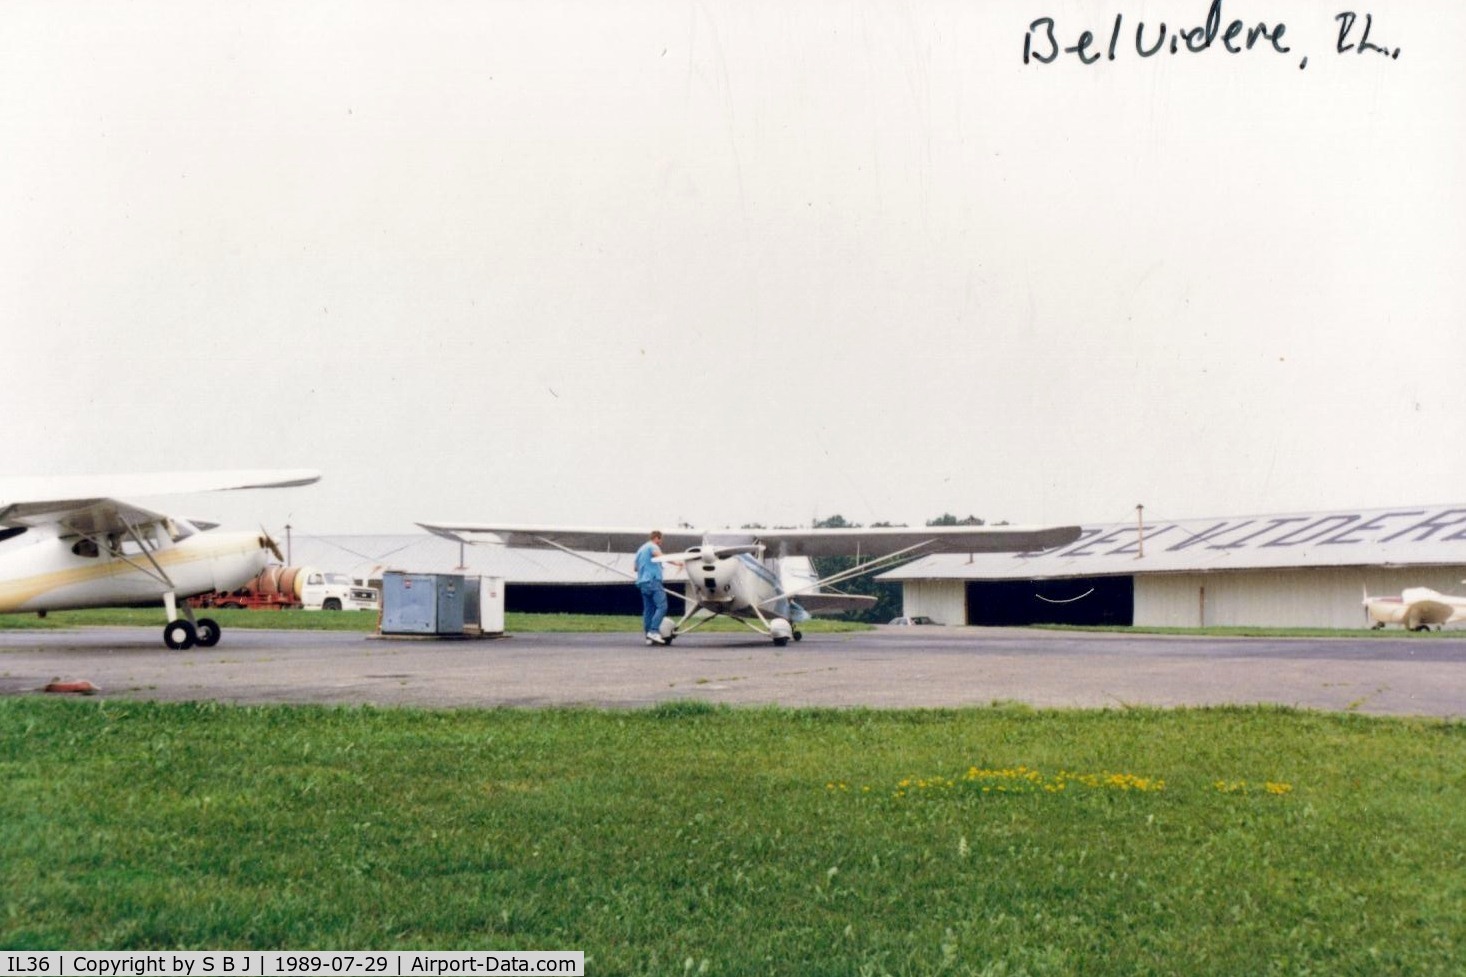 Bob Walberg Field Airport (IL36) - A fueling stop at Belvidere,IL.